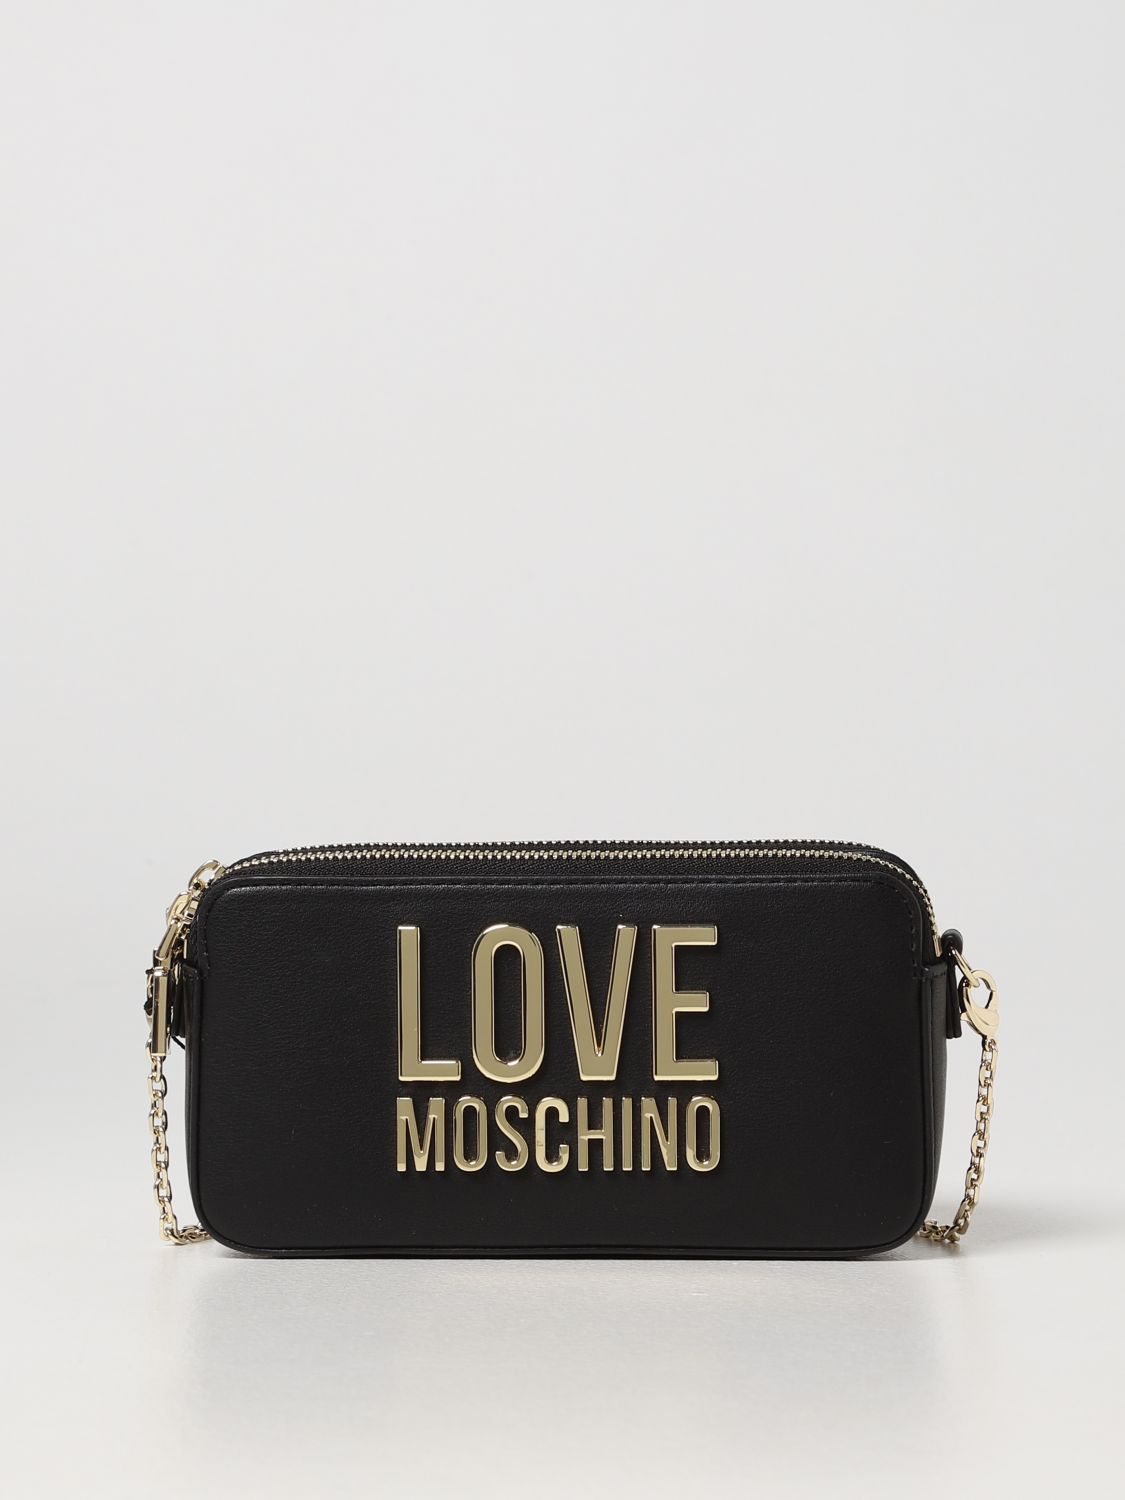 LOVE MOSCHINO: wallet on chain bag - Black | Love Moschino mini bag ...